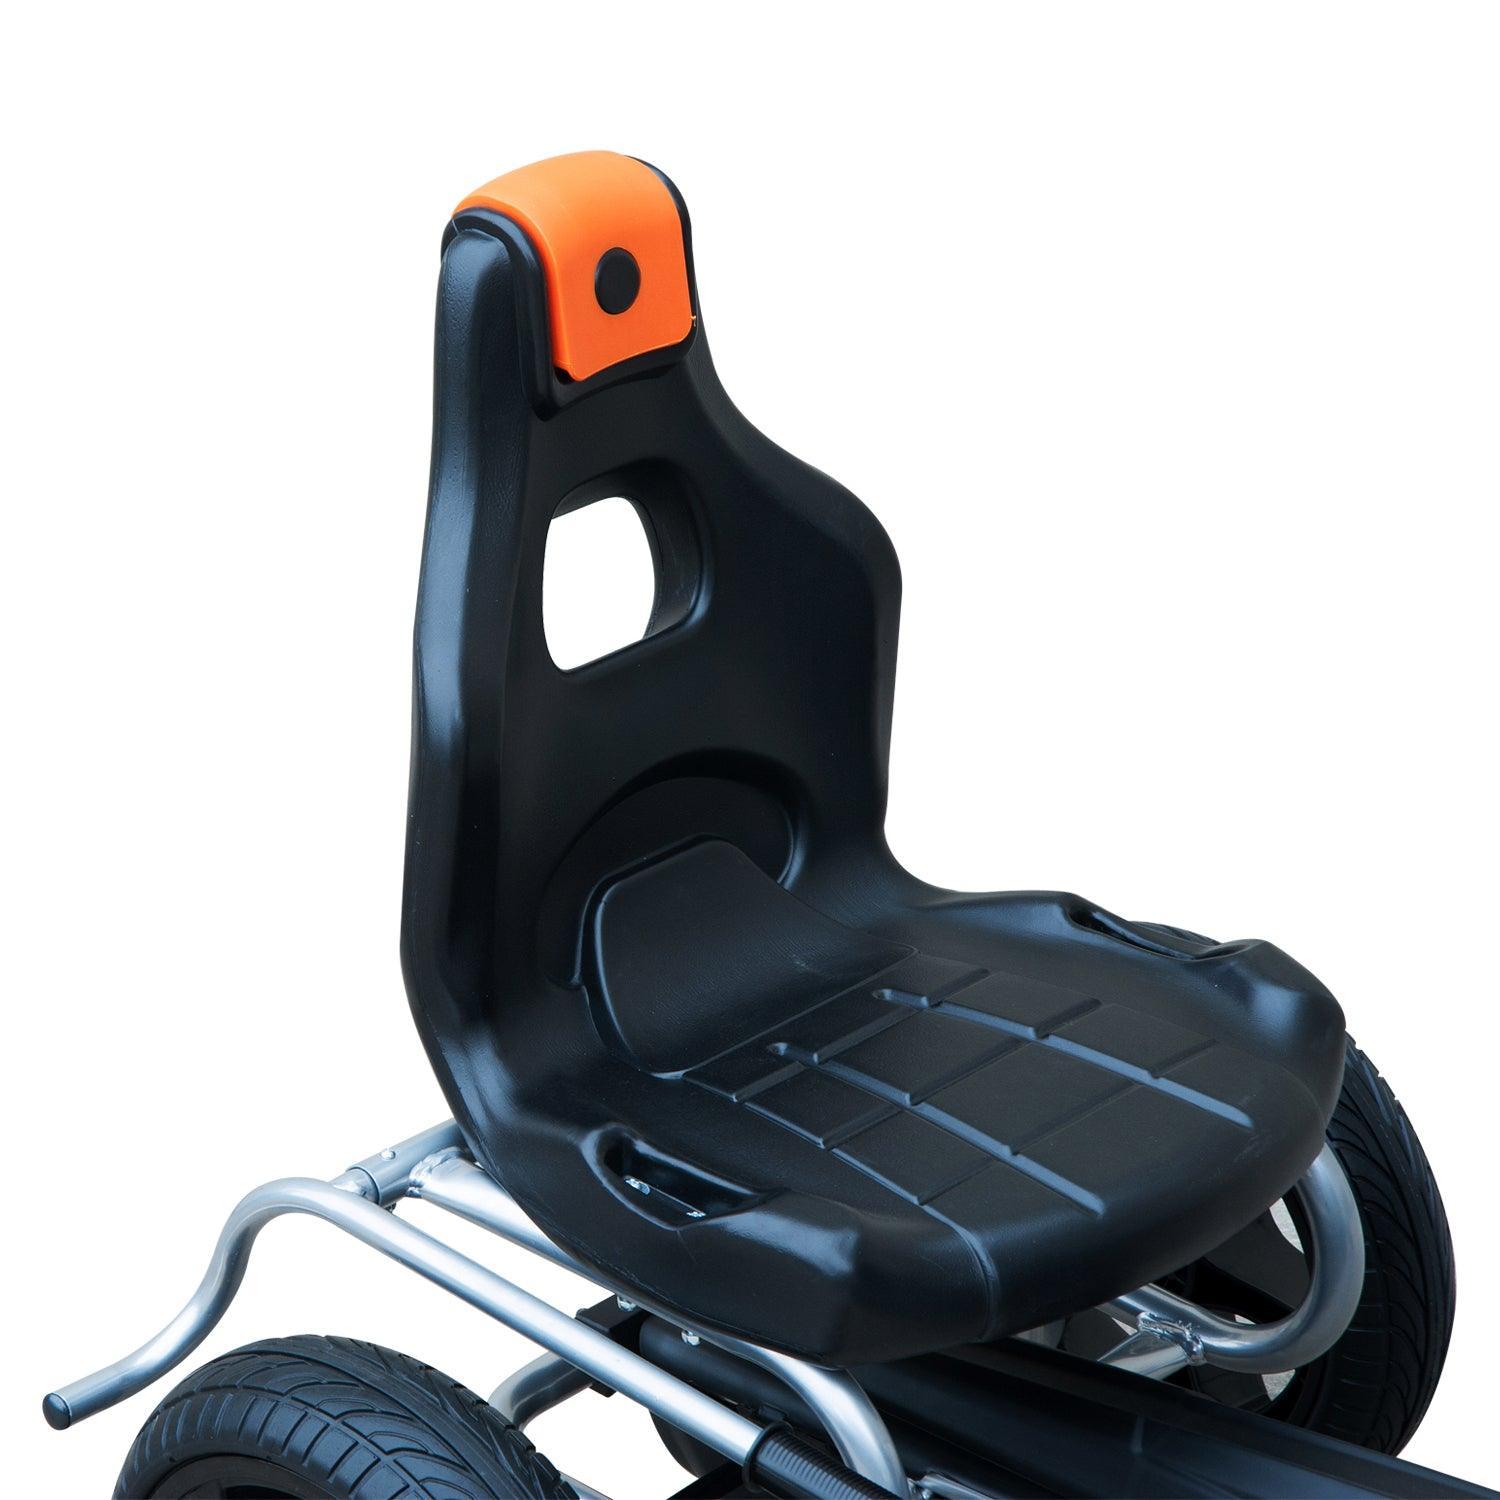 HOMCOM Pedal Go Kart: Kid's Outdoor Toy, Brakes - ALL4U RETAILER LTD